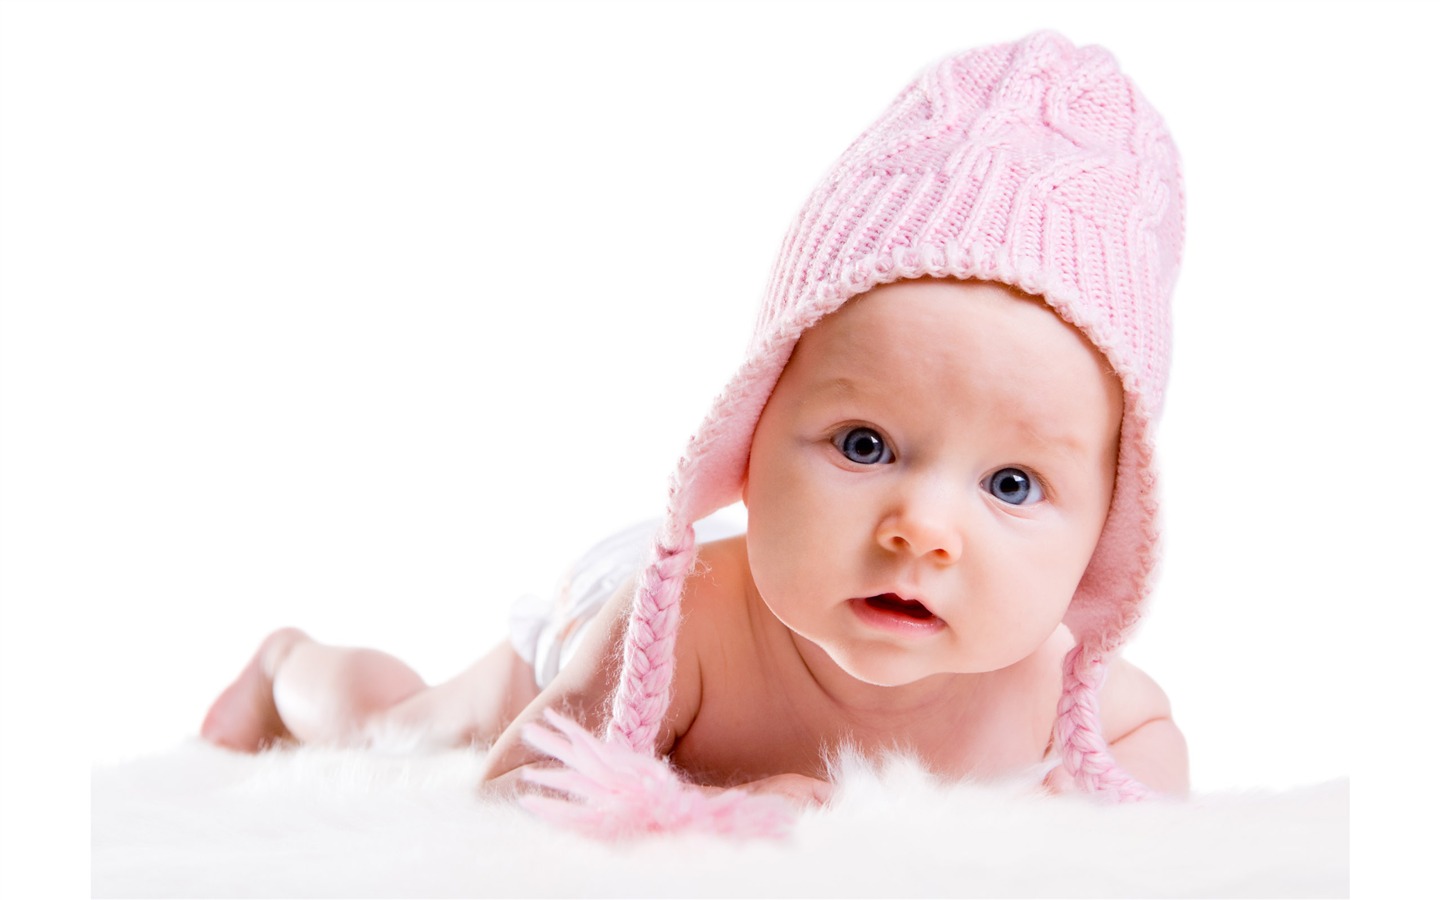 Fonds d'écran mignon de bébé (4) #11 - 1440x900